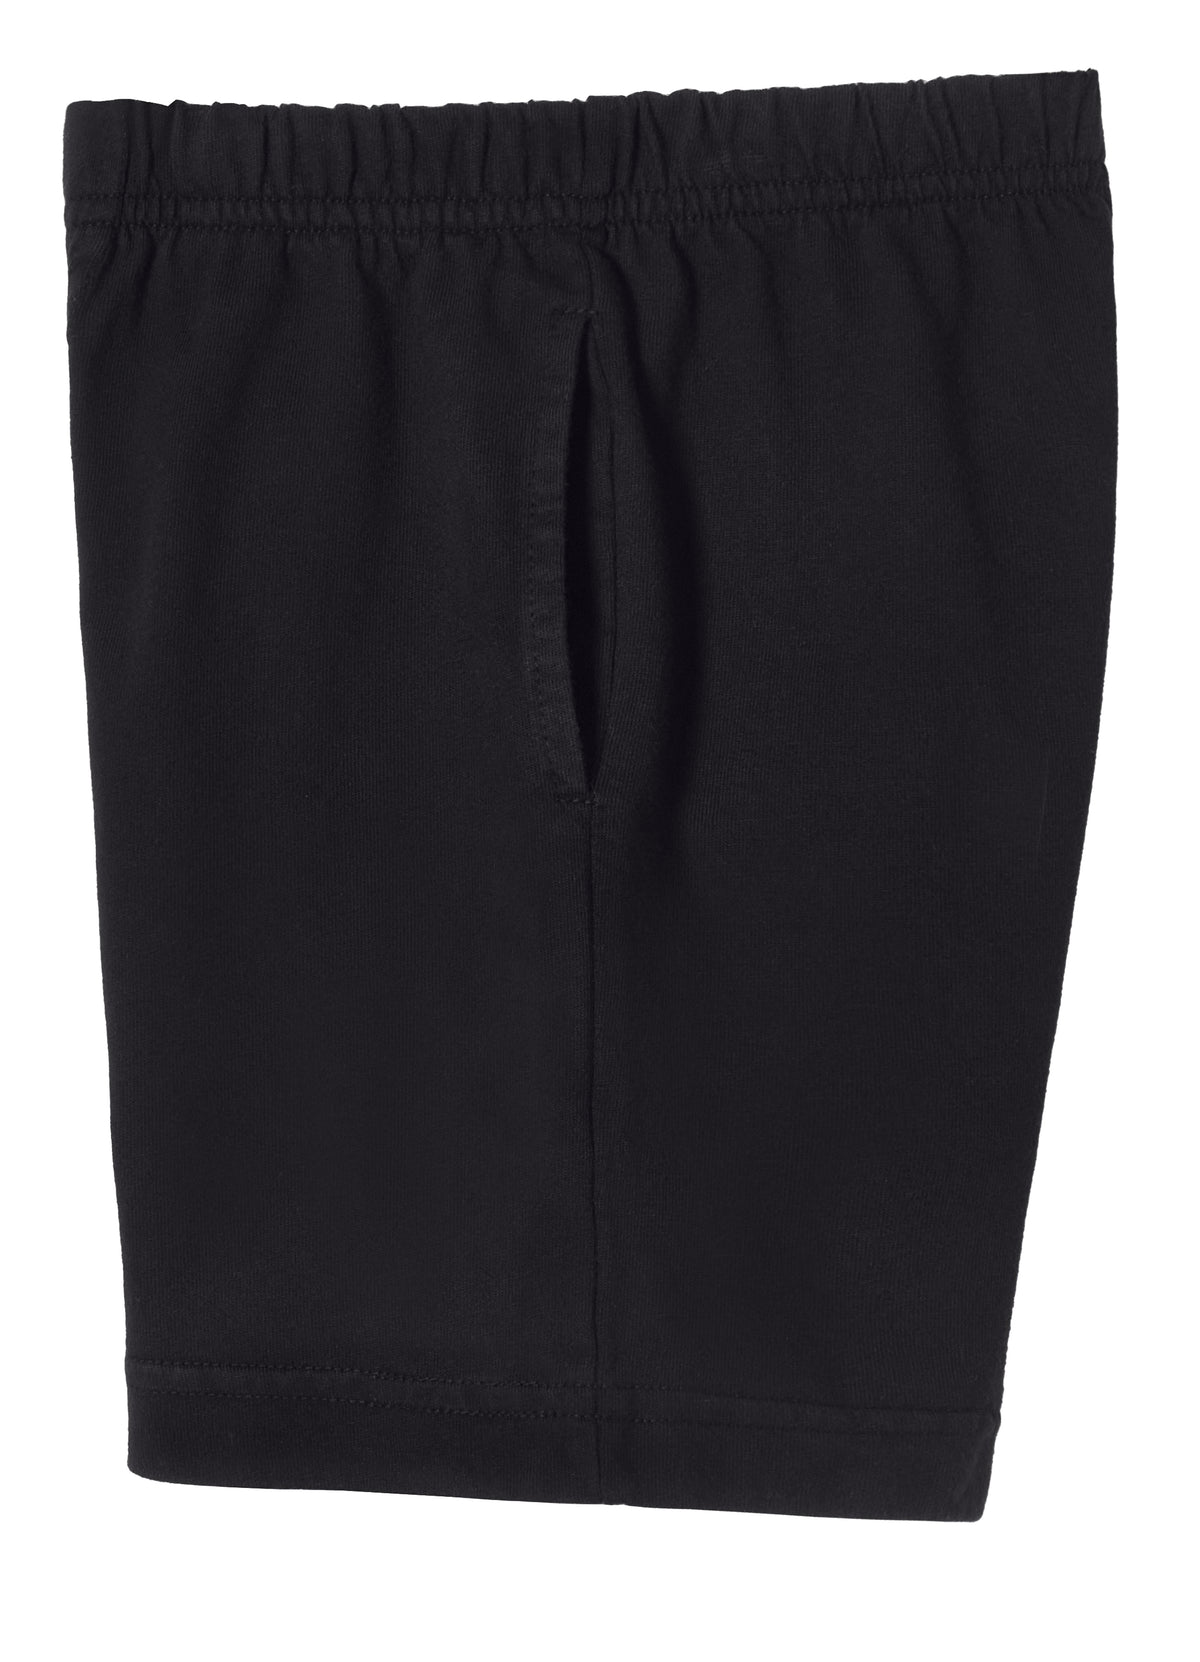 Boys Soft Cotton UPF 50+ Above-Knee Side Pocket Shorts | Black